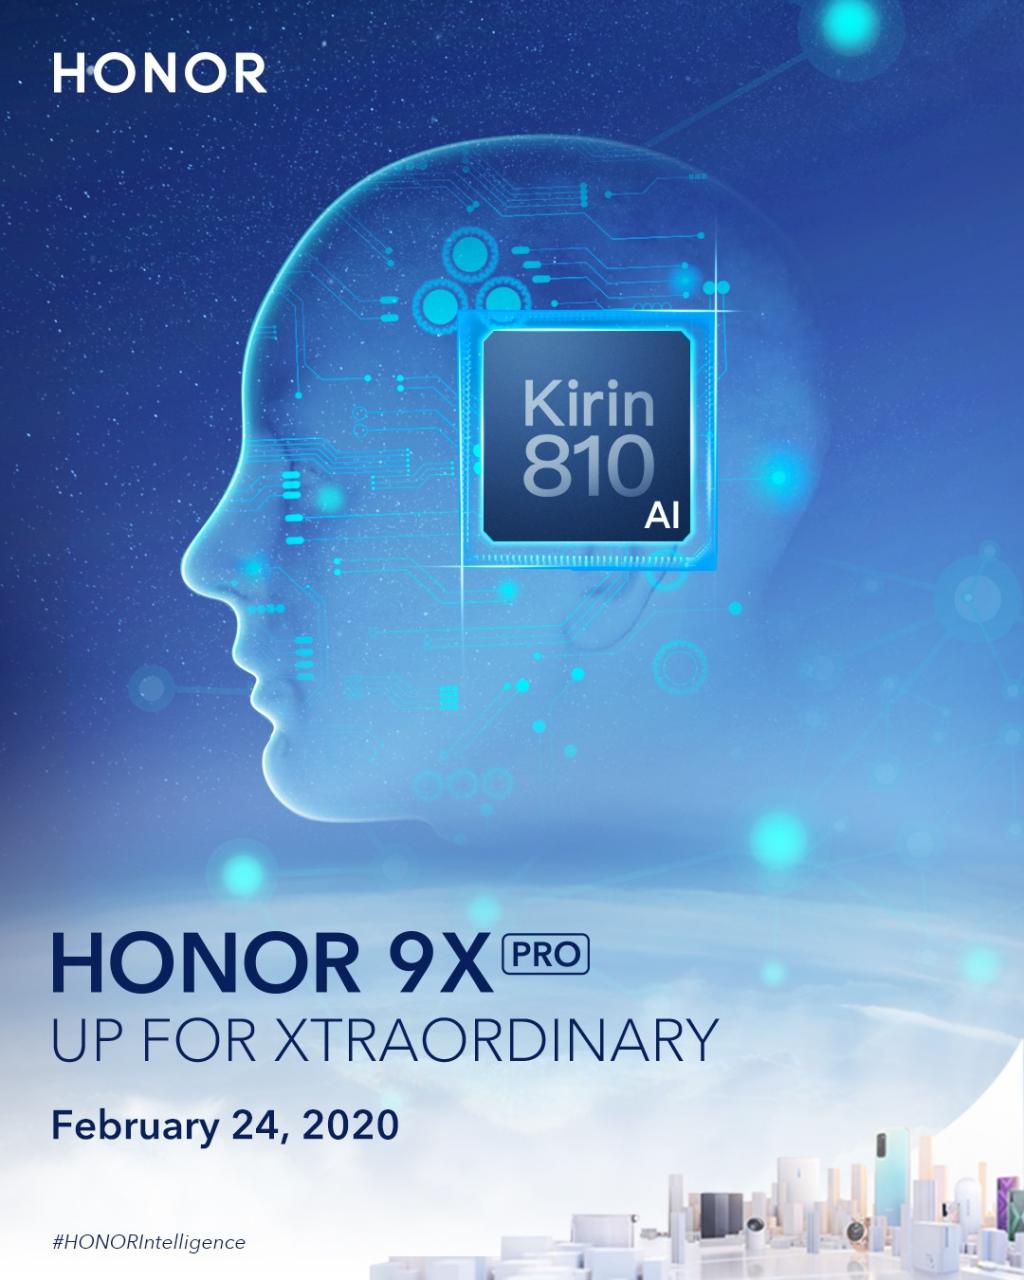 honor 9x pro img 1kirin810 1